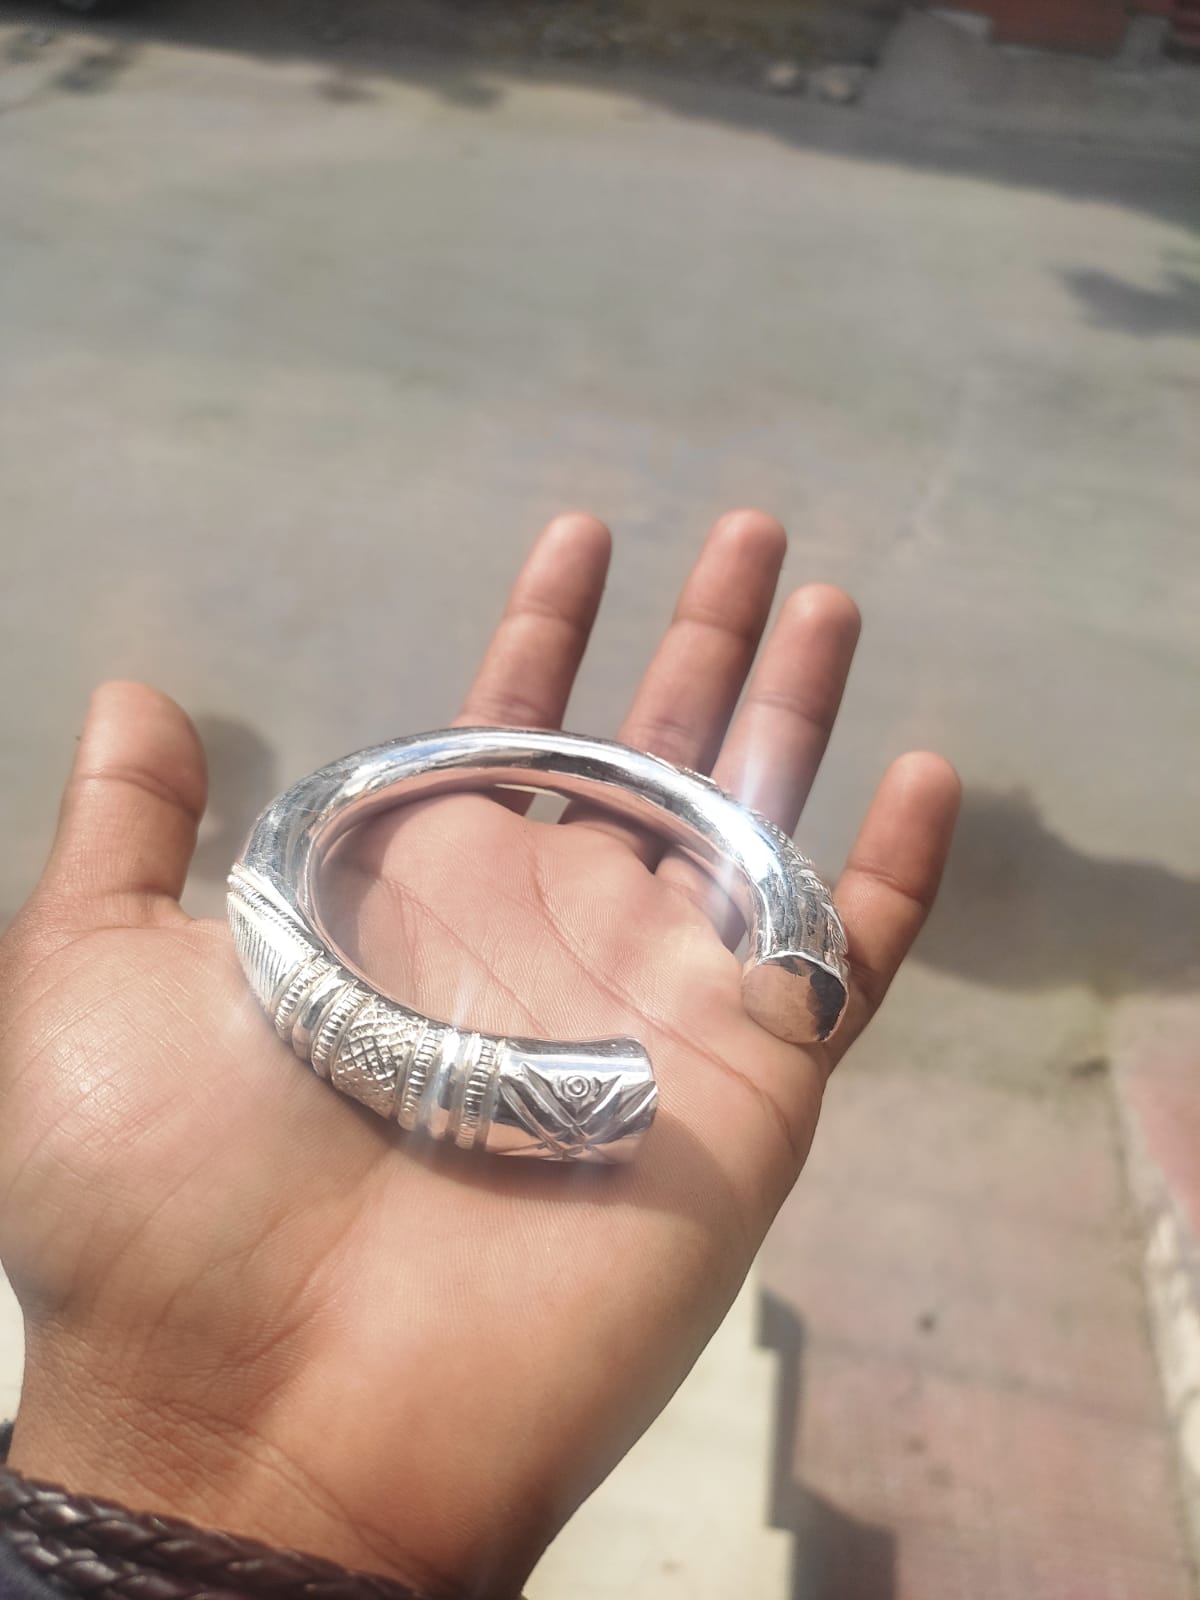 Original Karungali bracelet with certificate